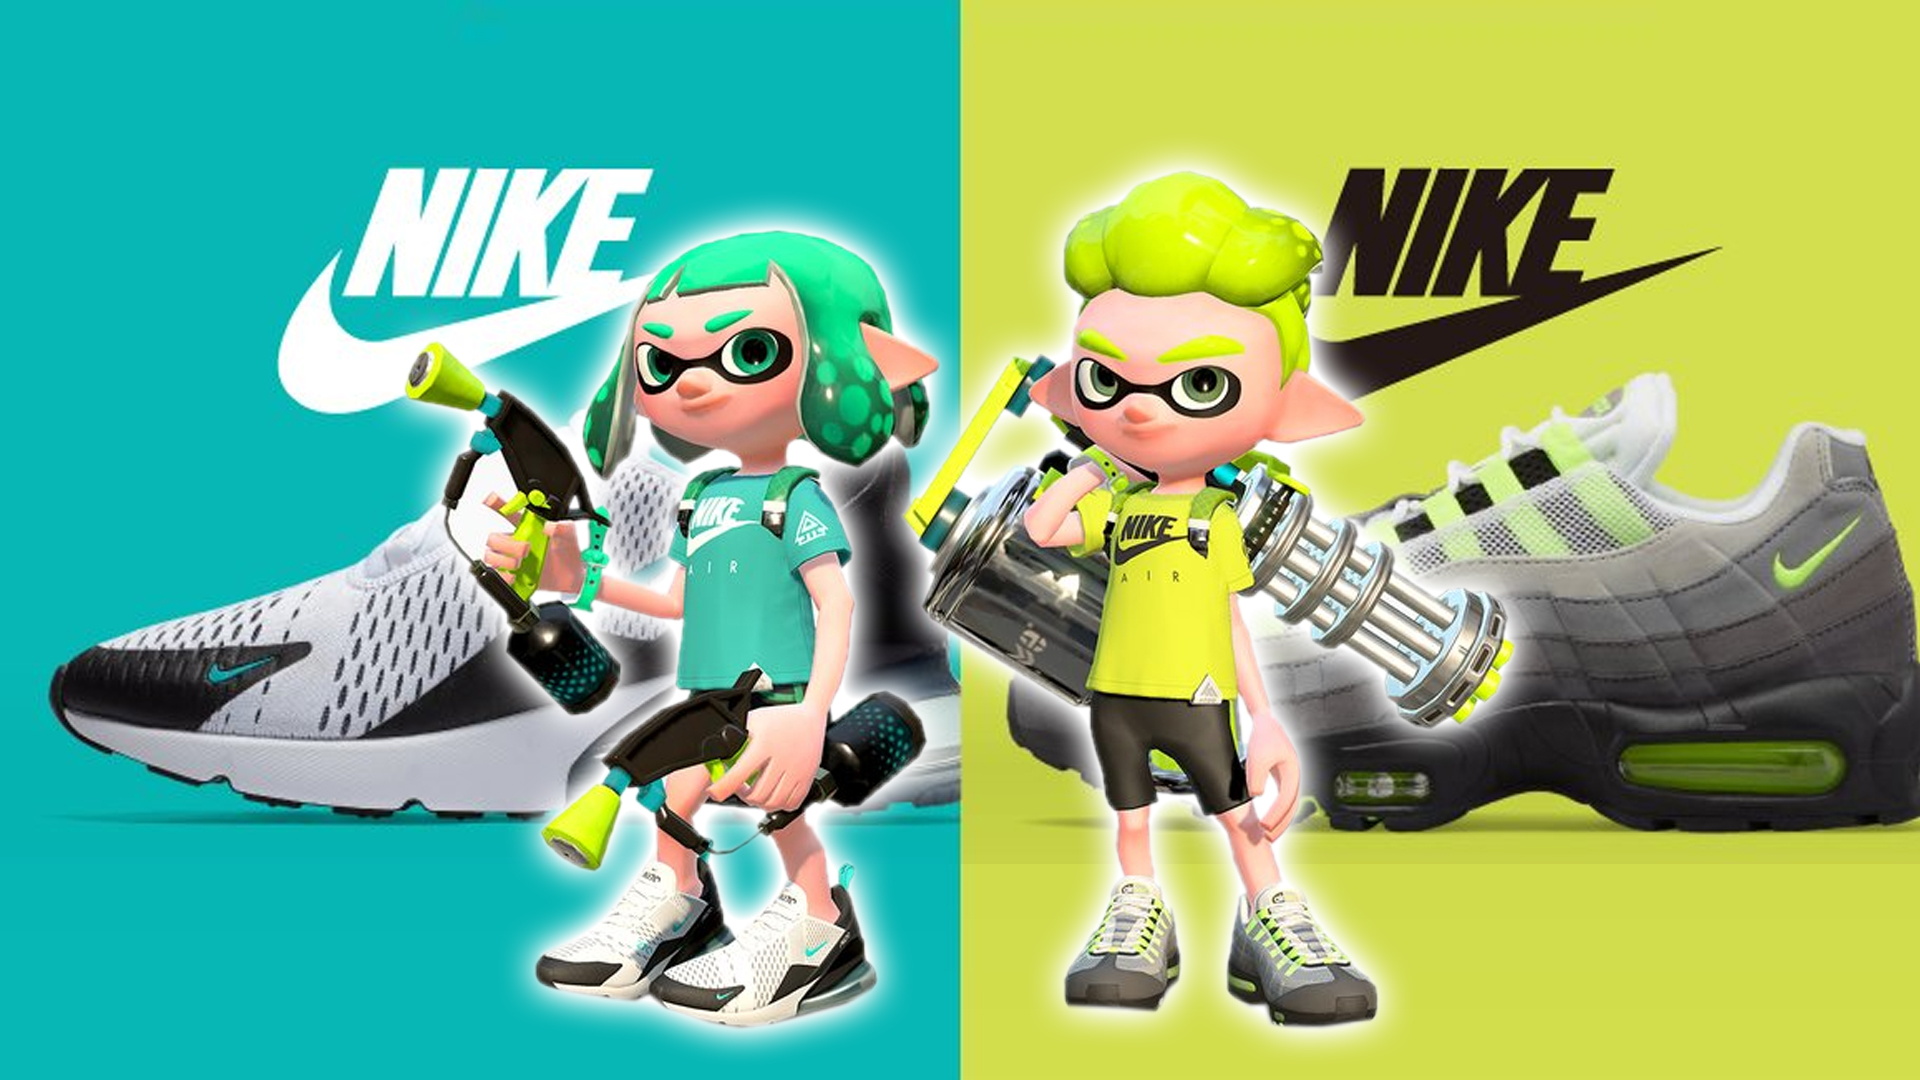 Japan S Latest Splatfest Is Sponsored By Nike Nintendo Wire